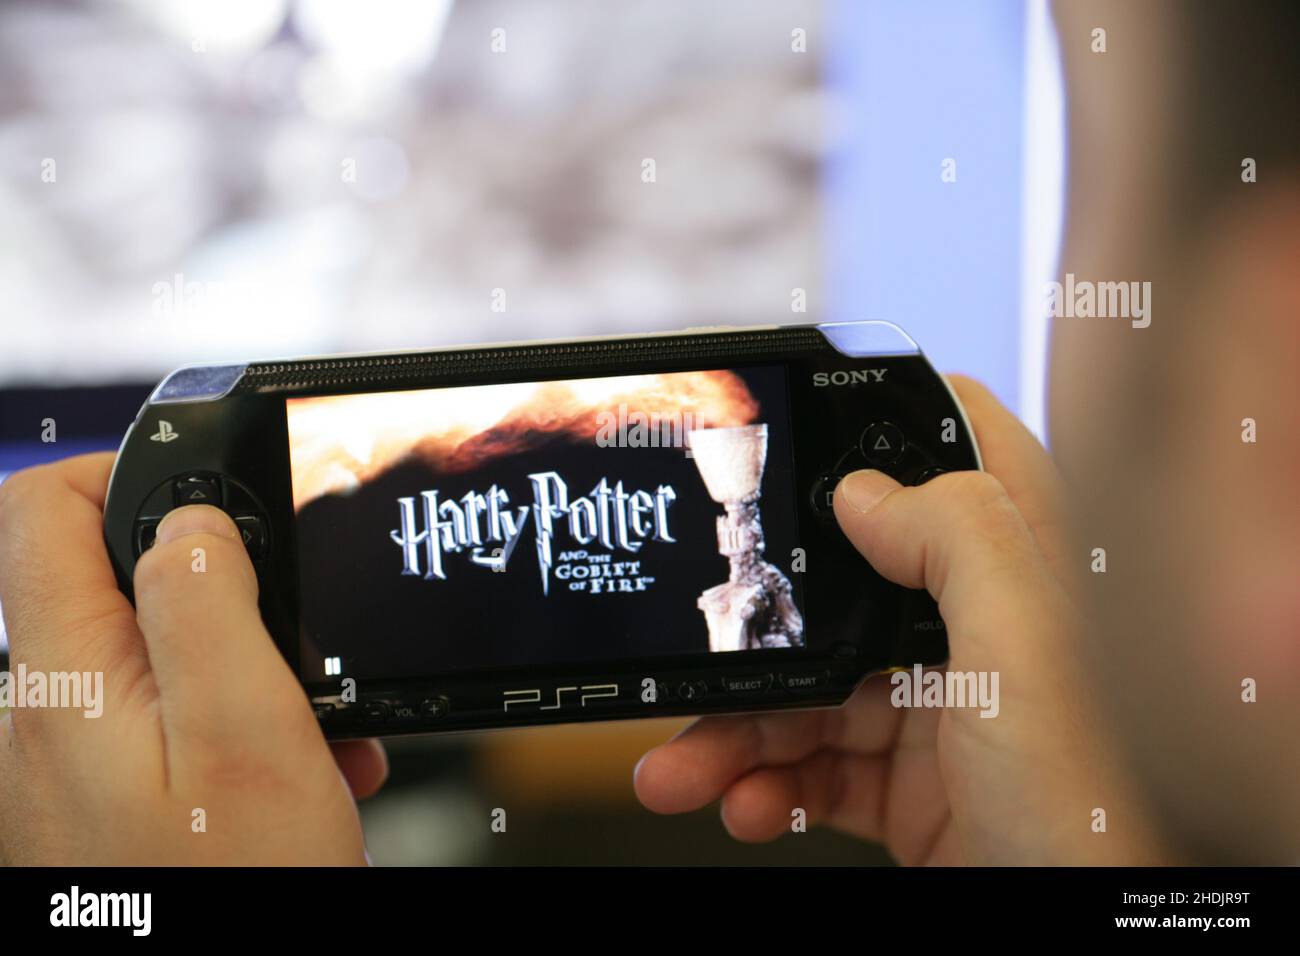 PSP-portabel Playstation - Harry Potter Game .Electronic Arts developer of video games were responsible for making the Harry Potter video games. Stock Photo